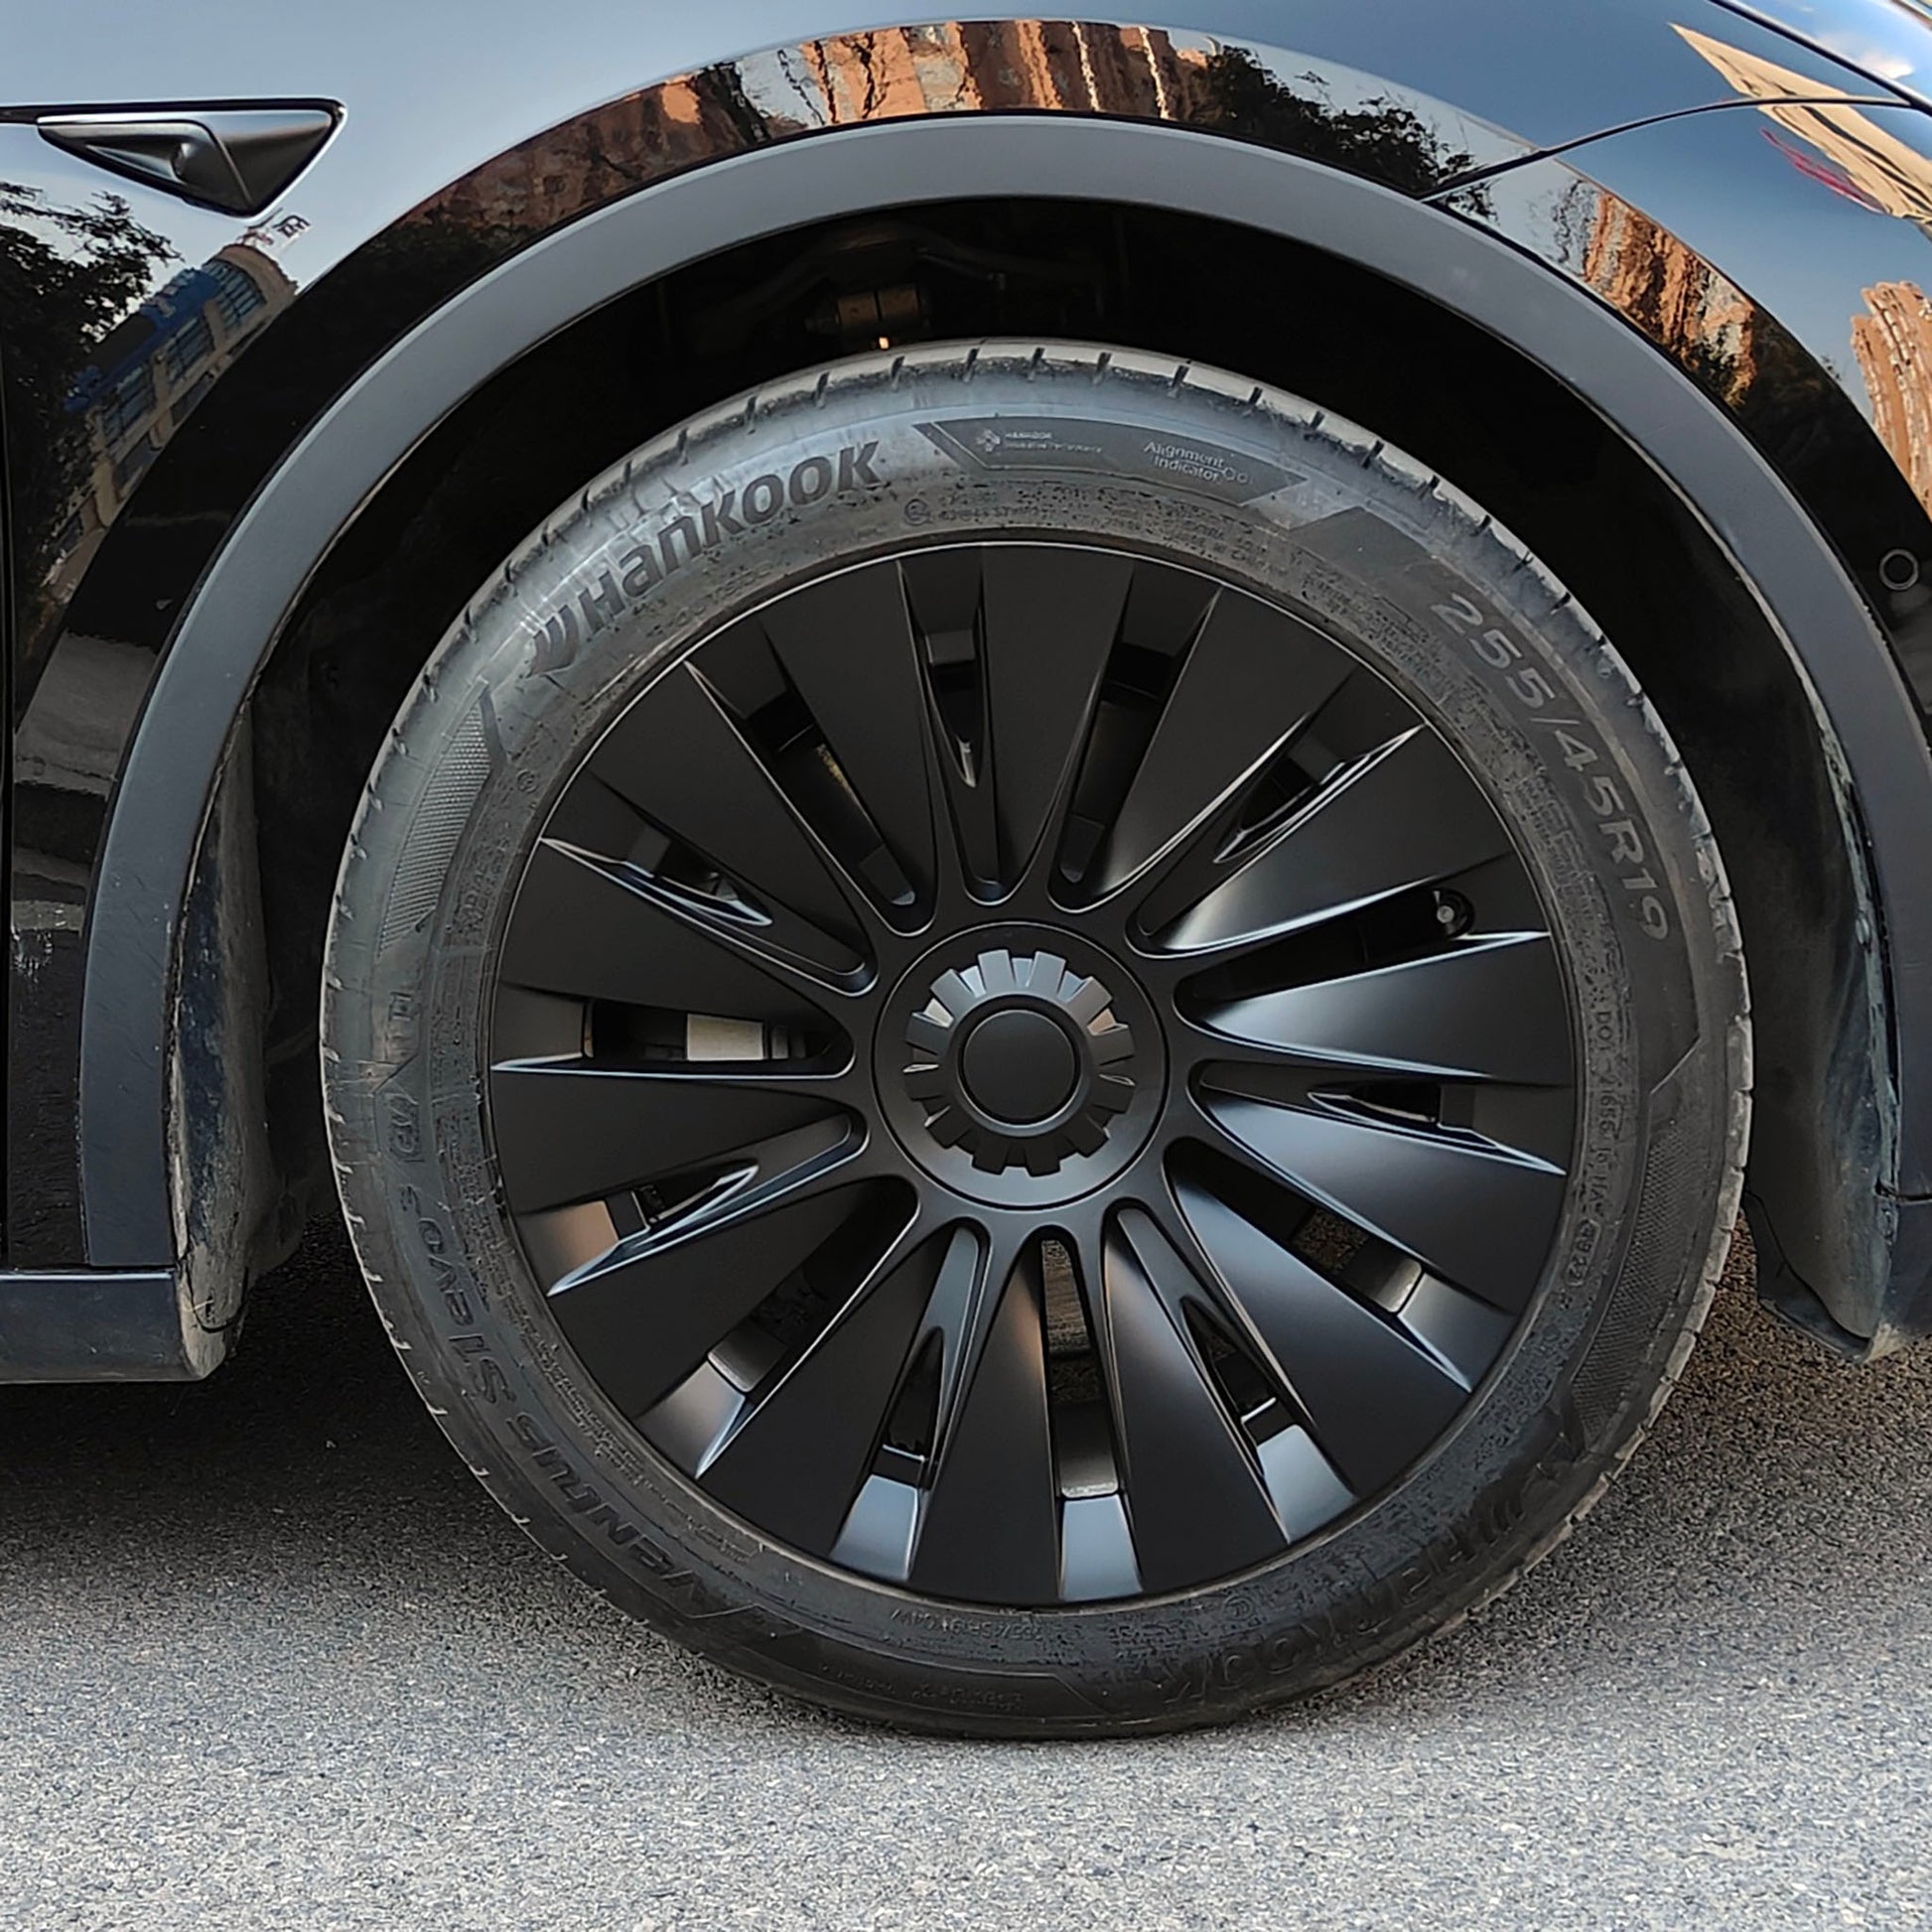 Tesla Wheel Caps Model Y Induction Wheel Covers 19 inch Matte 4PCS for  Gemini Wheels